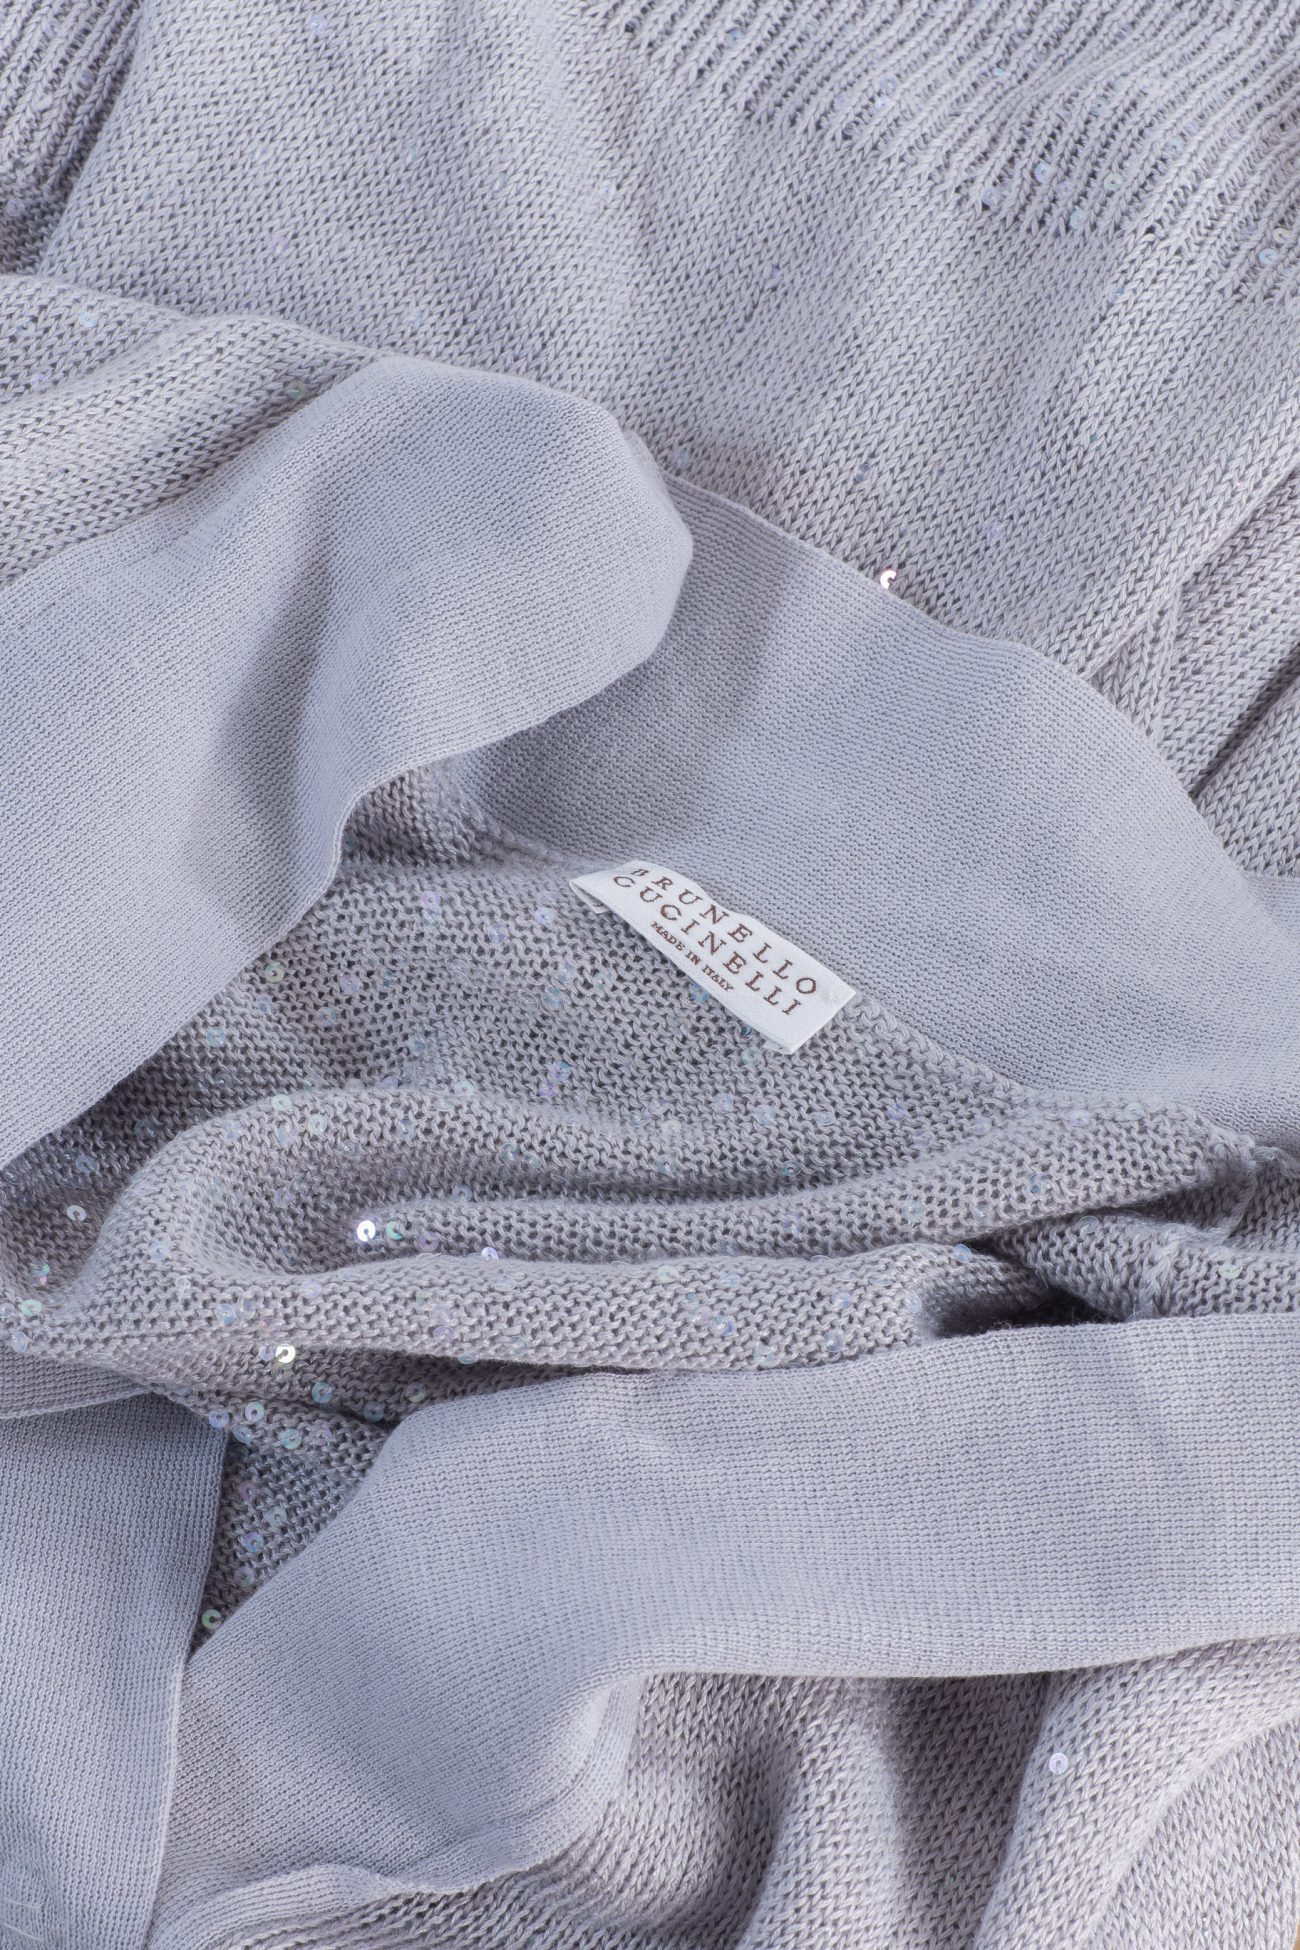 Brunello Cucinelli sequin-embellished linen and silk blend cardigan